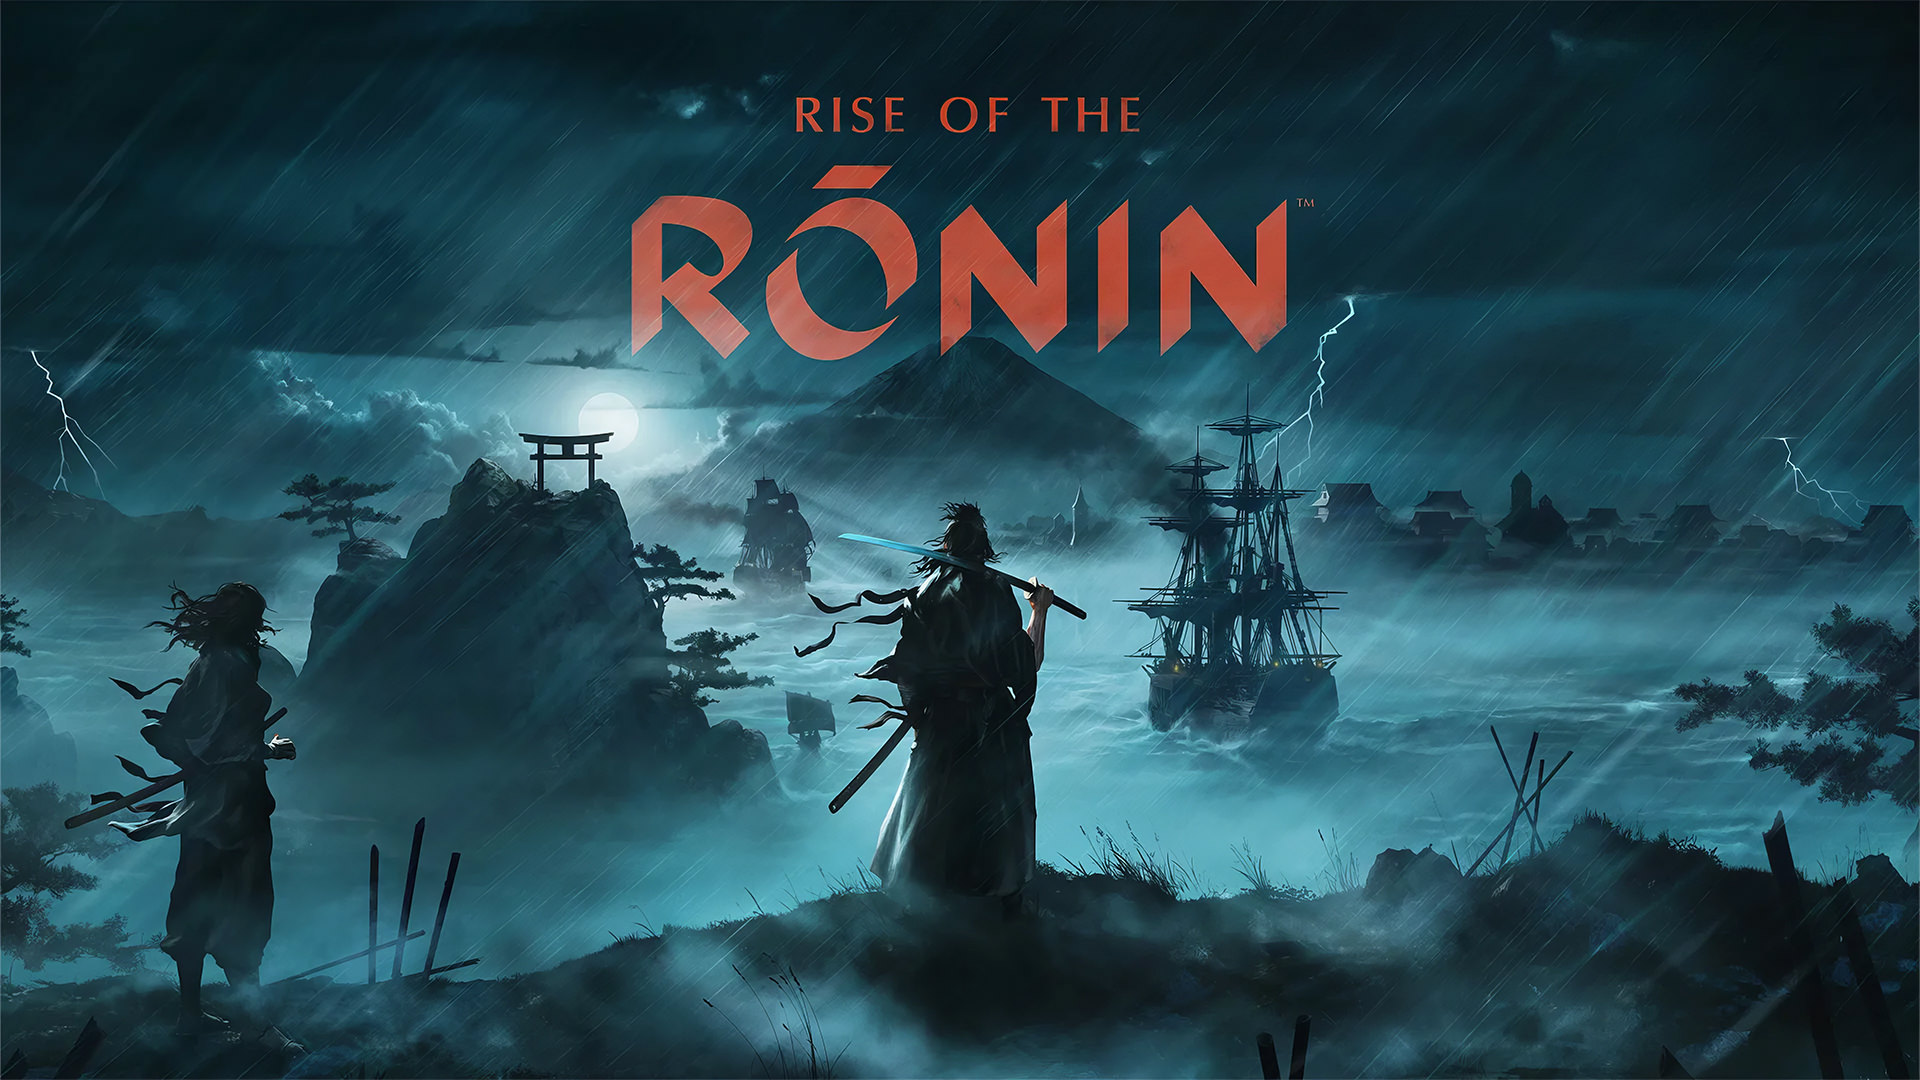 تریلر زمان عرضه Rise of the Ronin؛ ظهور رونین